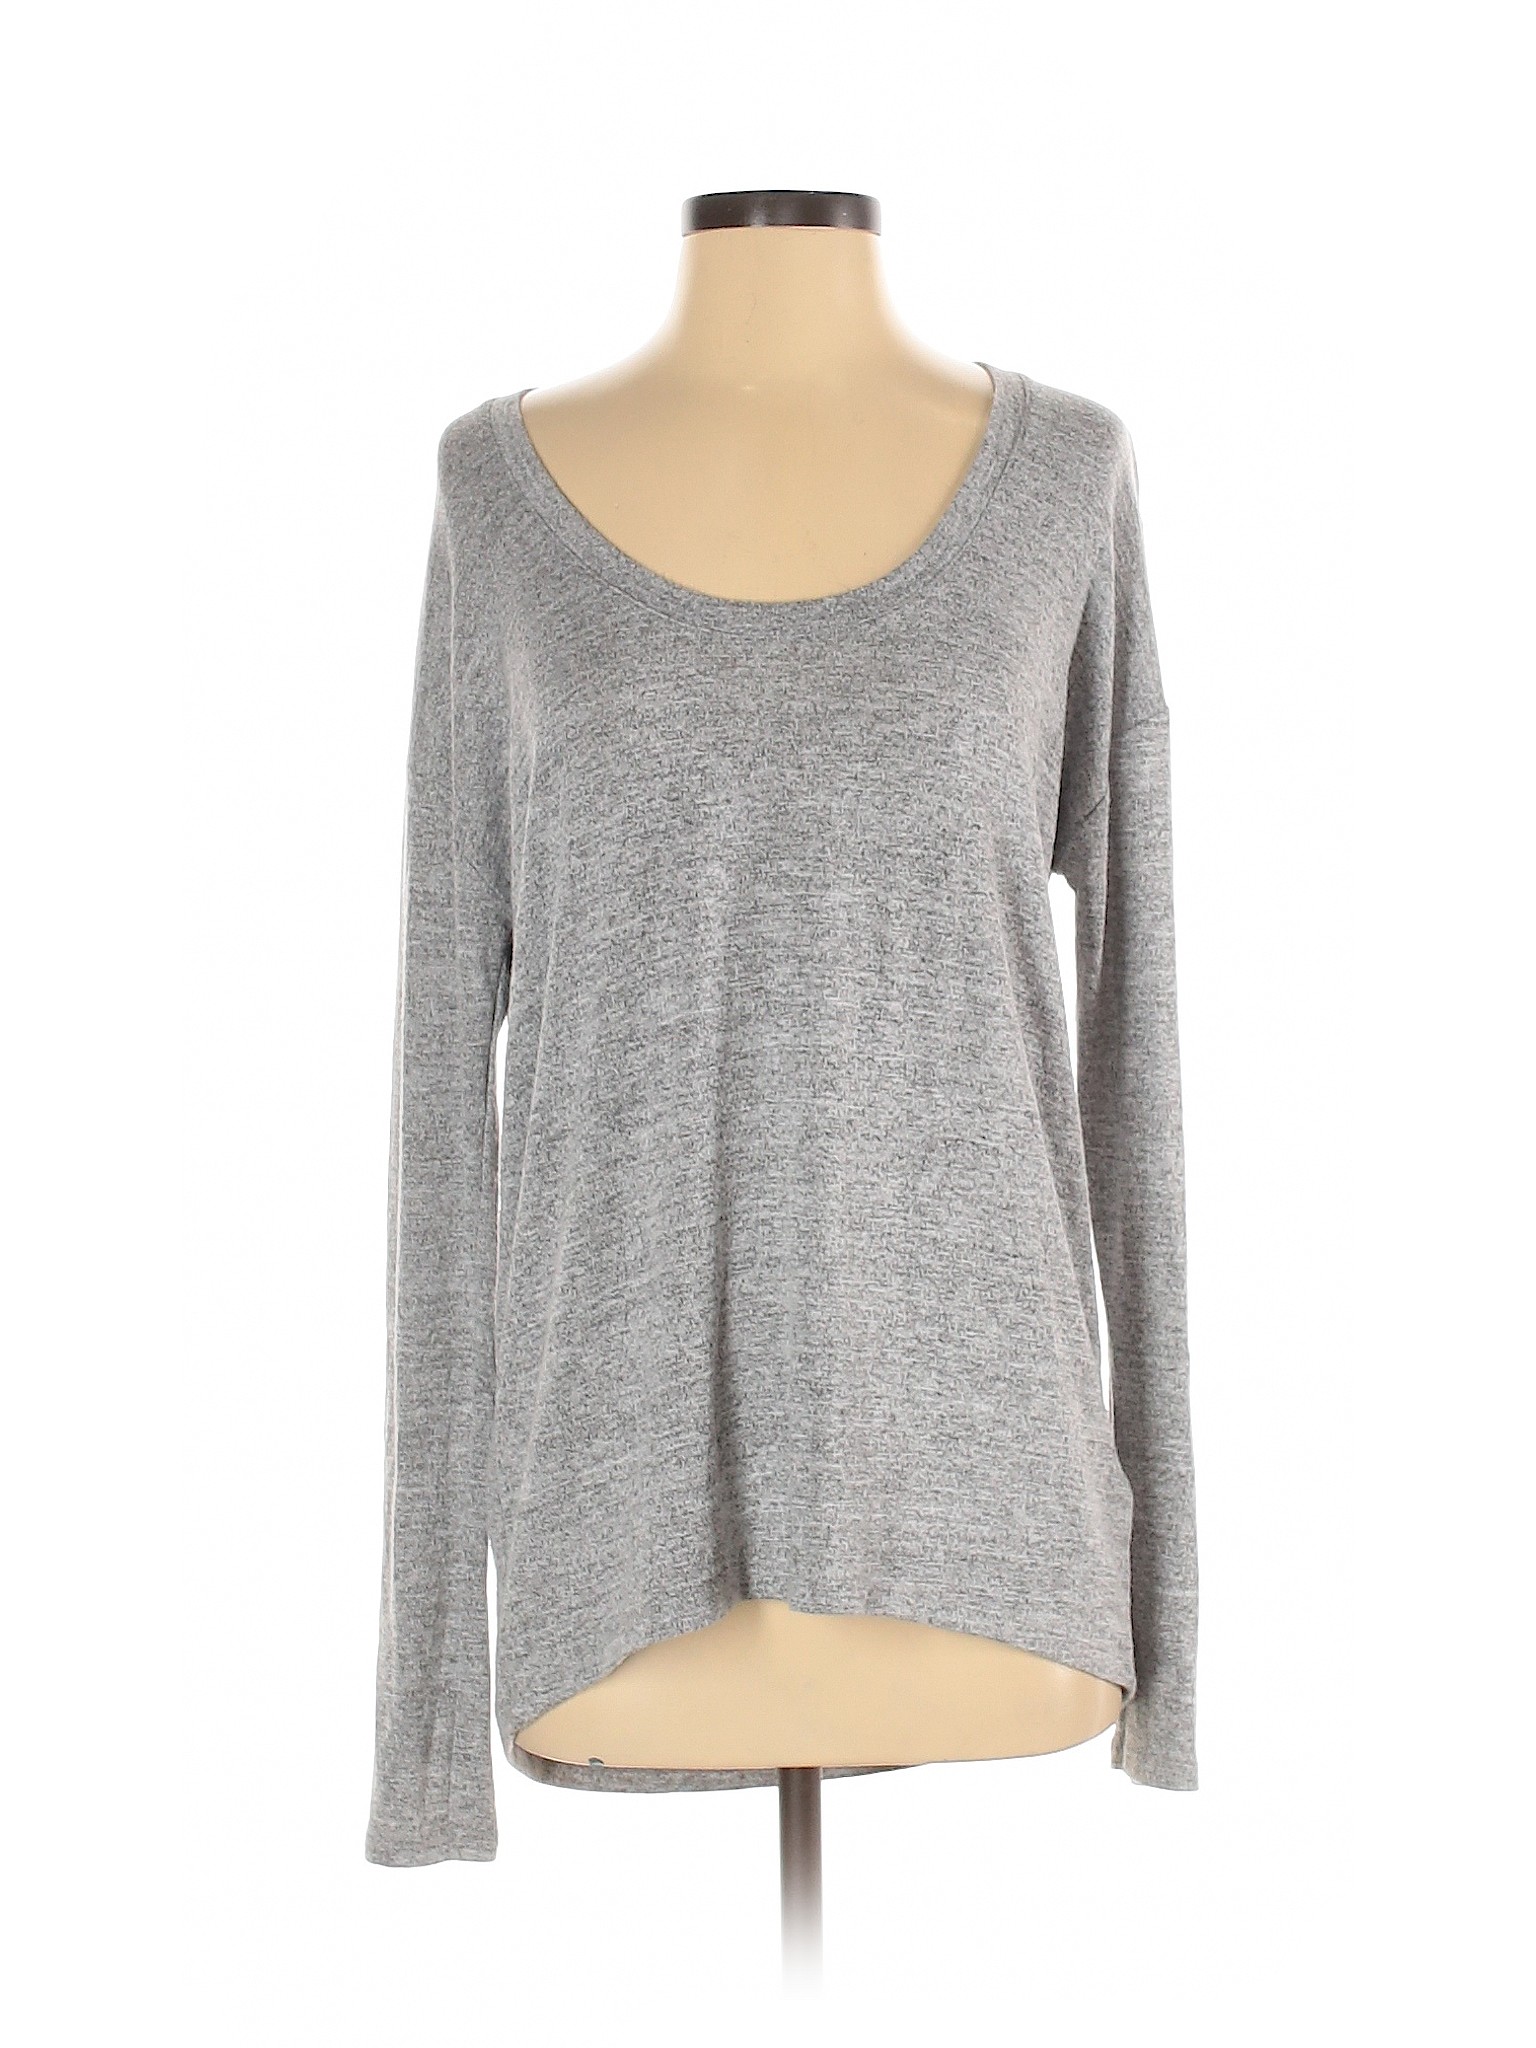 Gap Women Gray Long Sleeve Top S | eBay